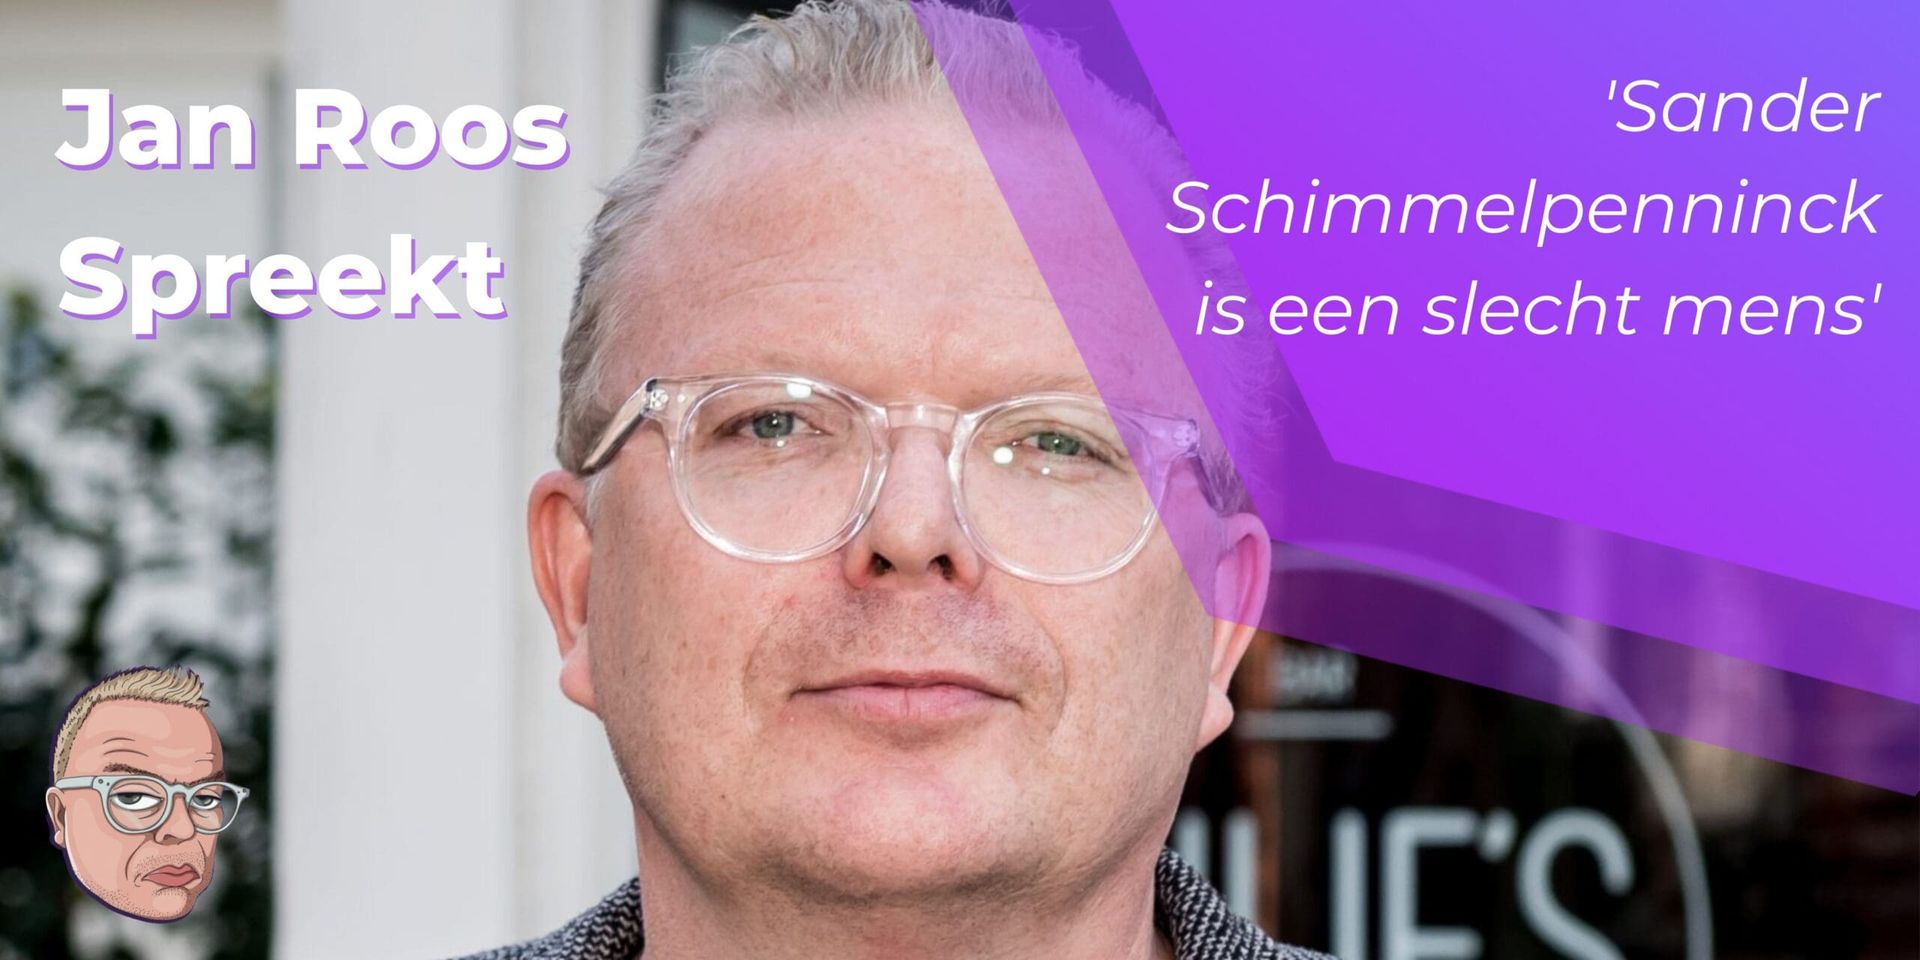 Sander Schimmelpenninck is een slecht mens